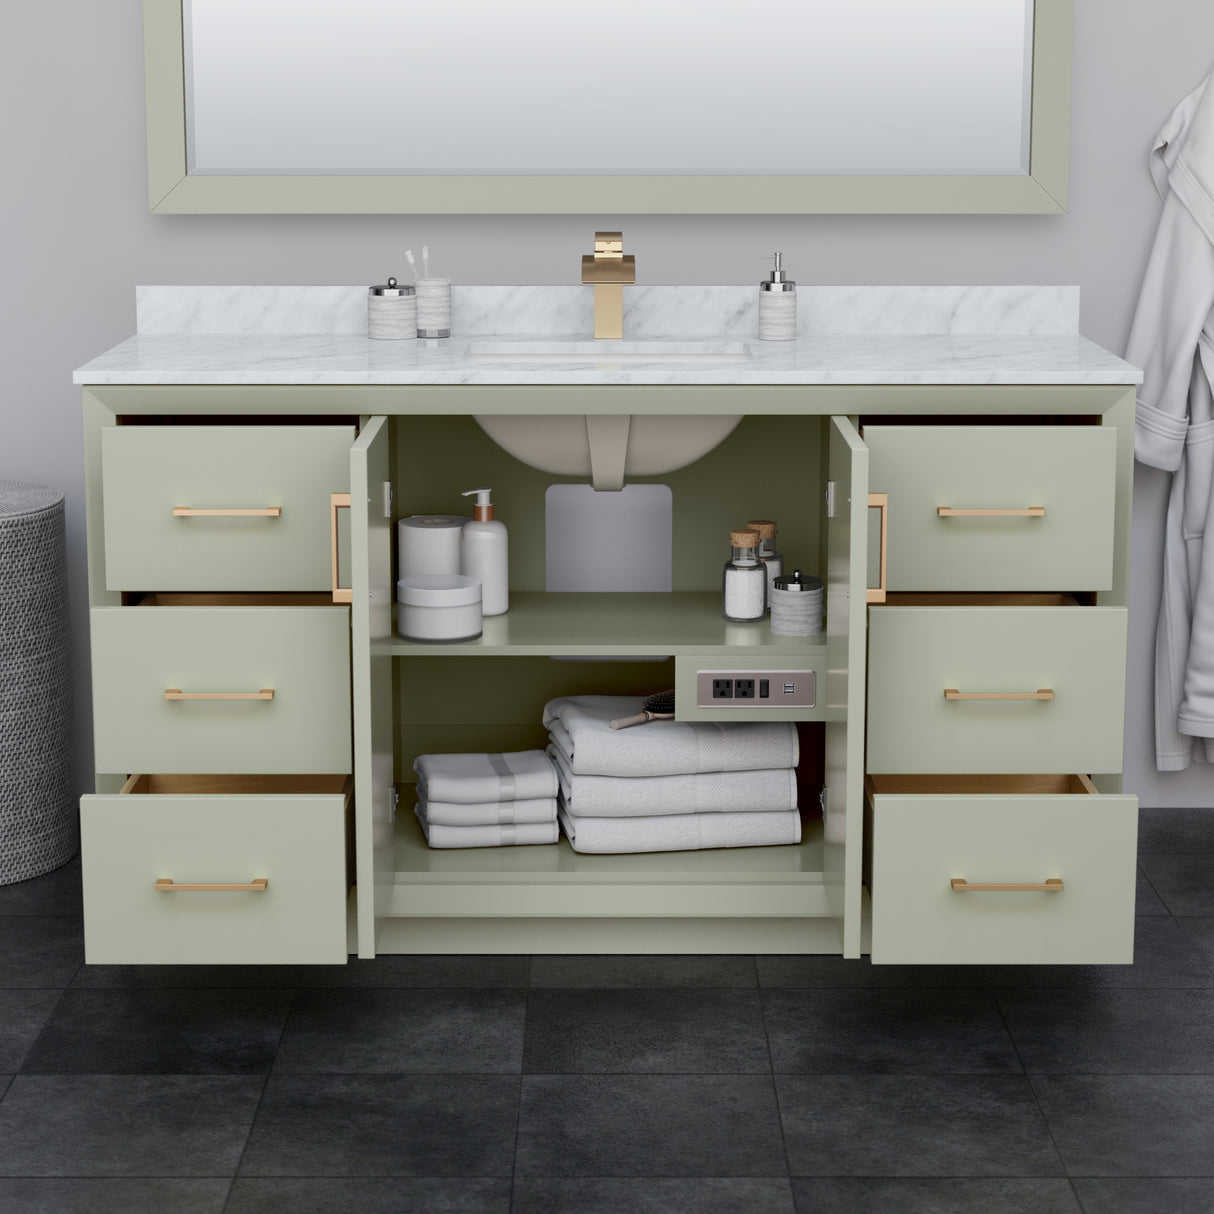 Strada 60 Inch Single Bathroom Vanity in Light Green No Countertop No Sink Brushed Nickel Trim 58 Inch Mirror